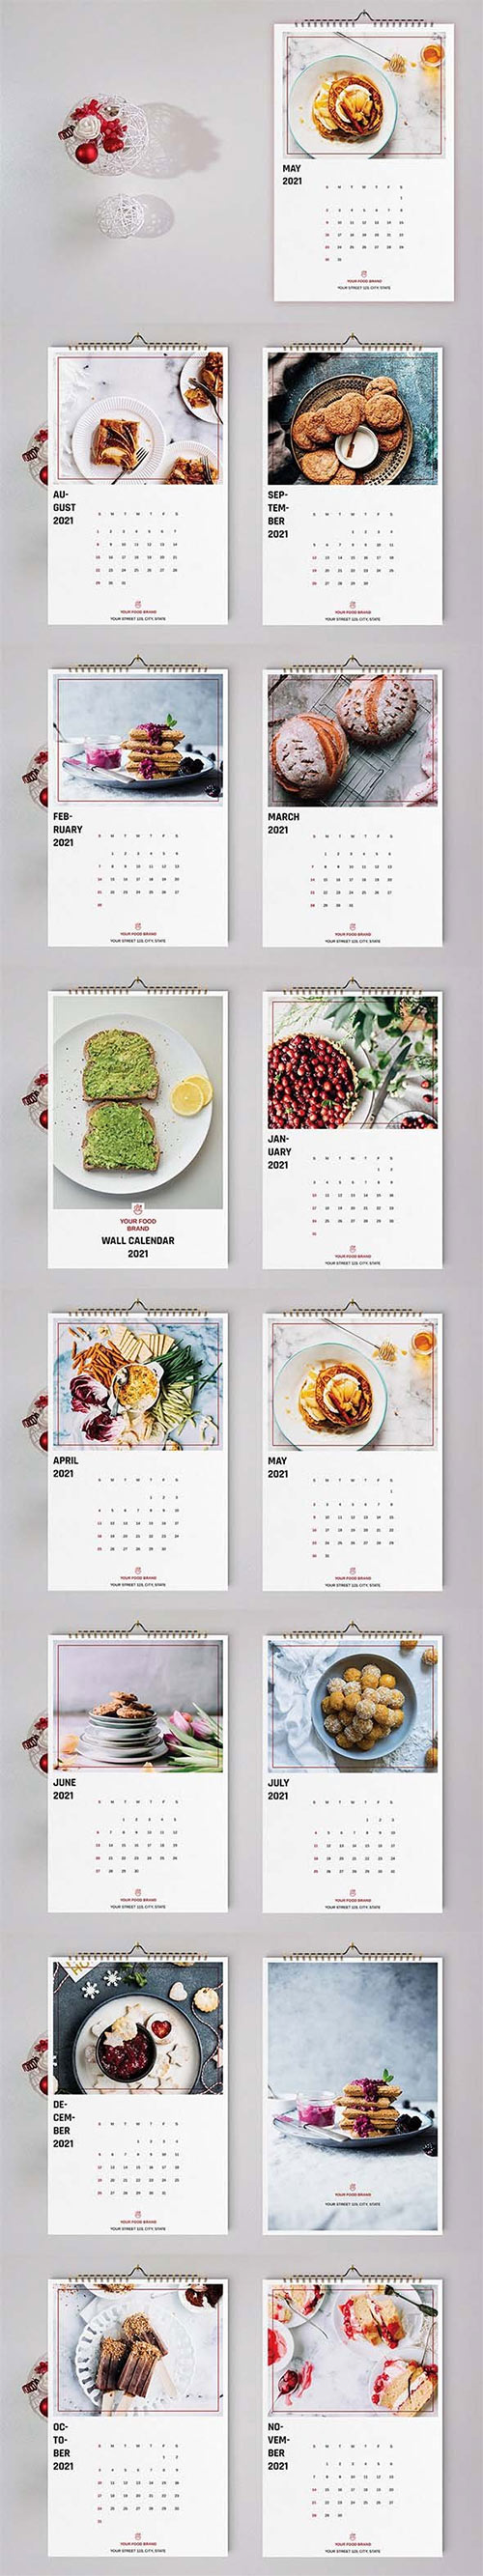 Food Wall Calendar Template 2021